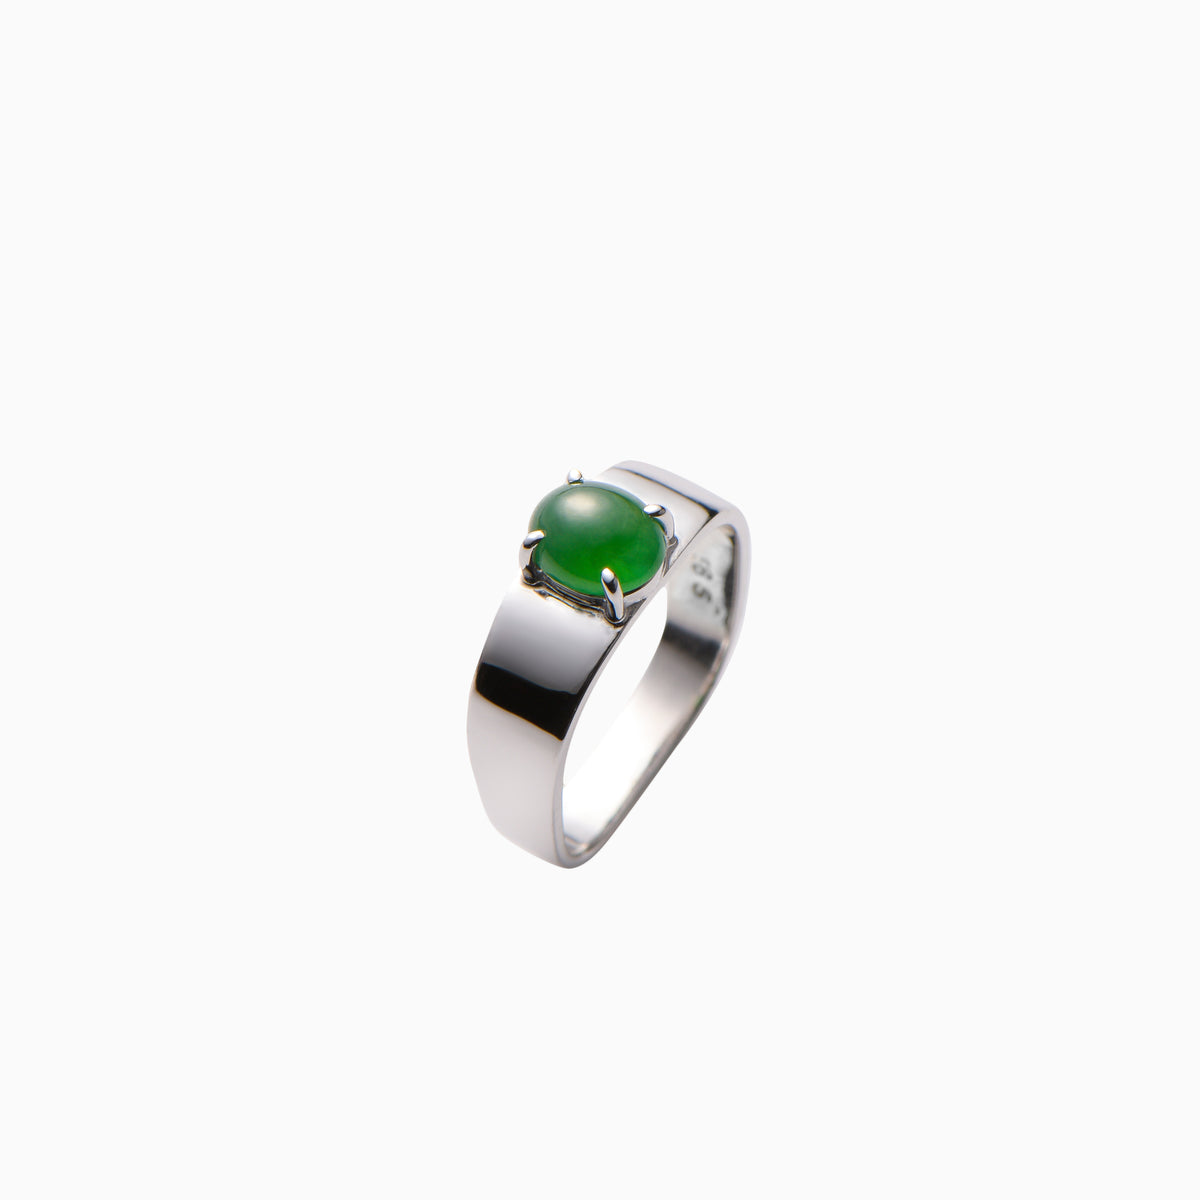 Green jade on a white gold 18k ring made for the little finger